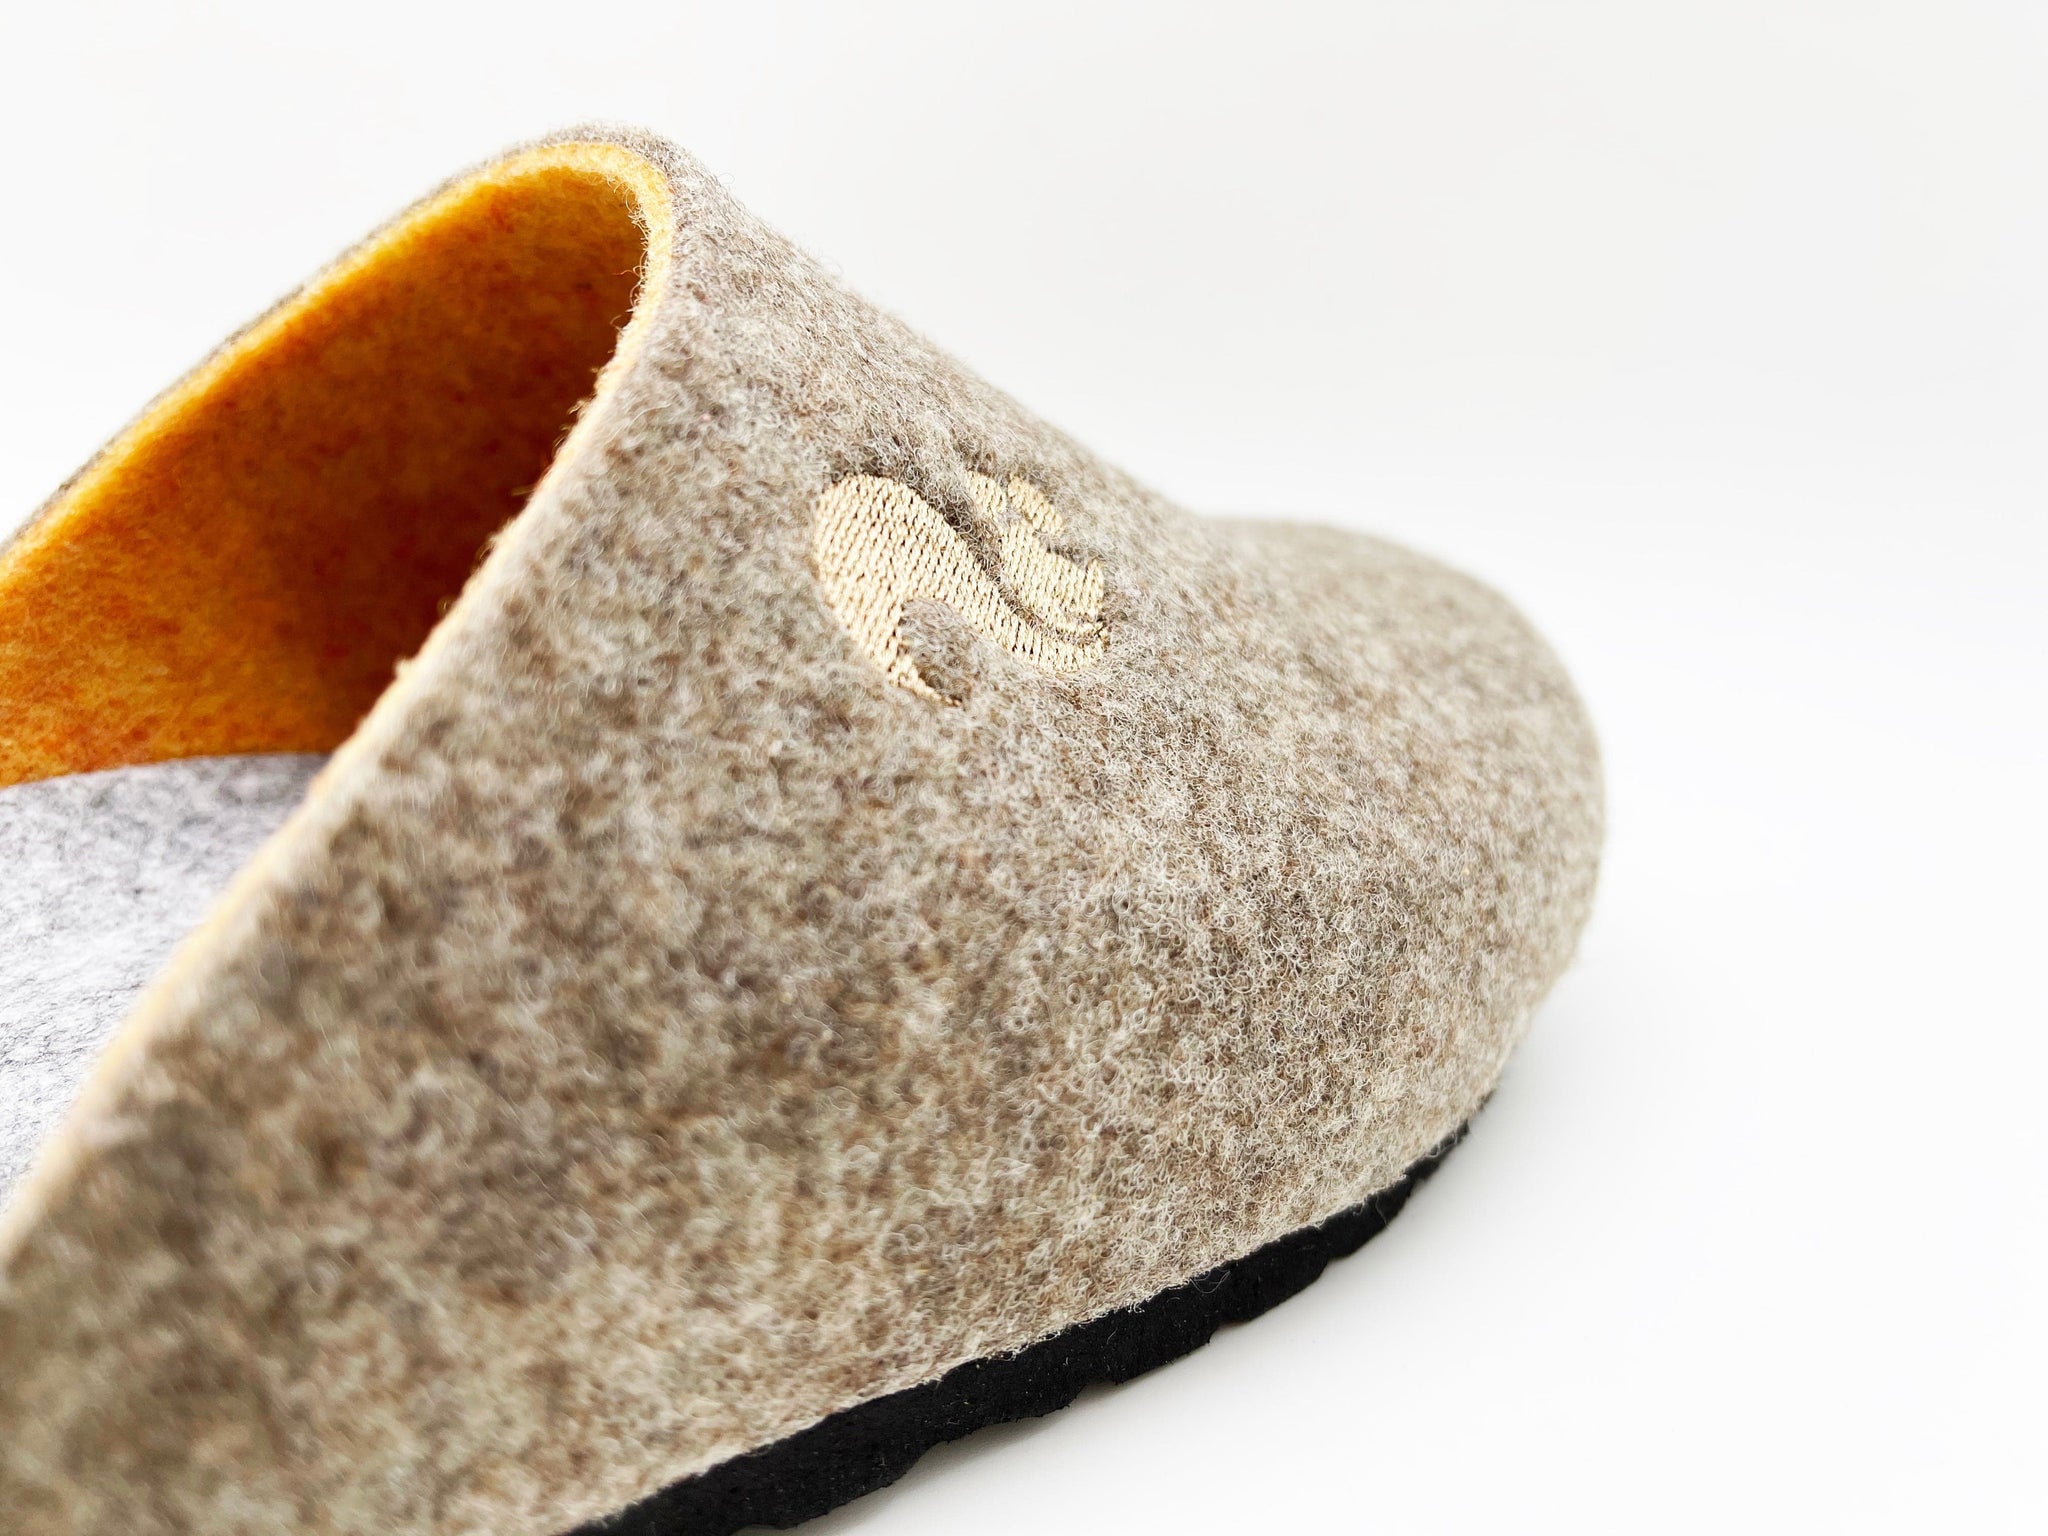 NAT 2 calzado thies 1856 ® PET reciclado Bio Zueco vegano marrón claro naranja (W/M/X) moda sostenible moda ética